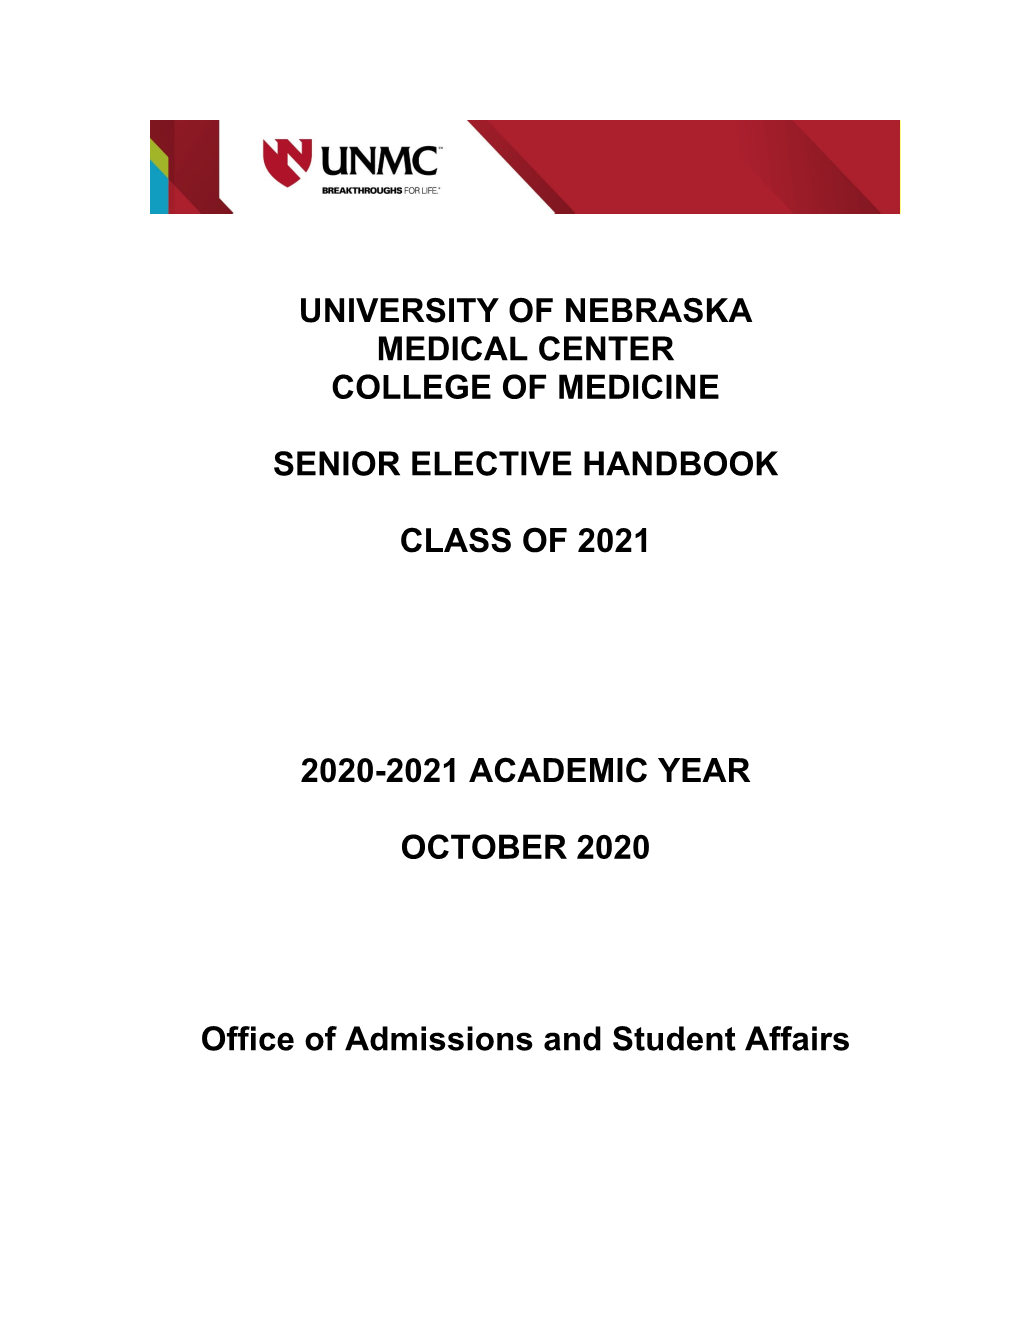 University of Nebraska Medical Center College of Medicine Senior Elective Handbook Class of 2021 2020-2021 Academic Year October